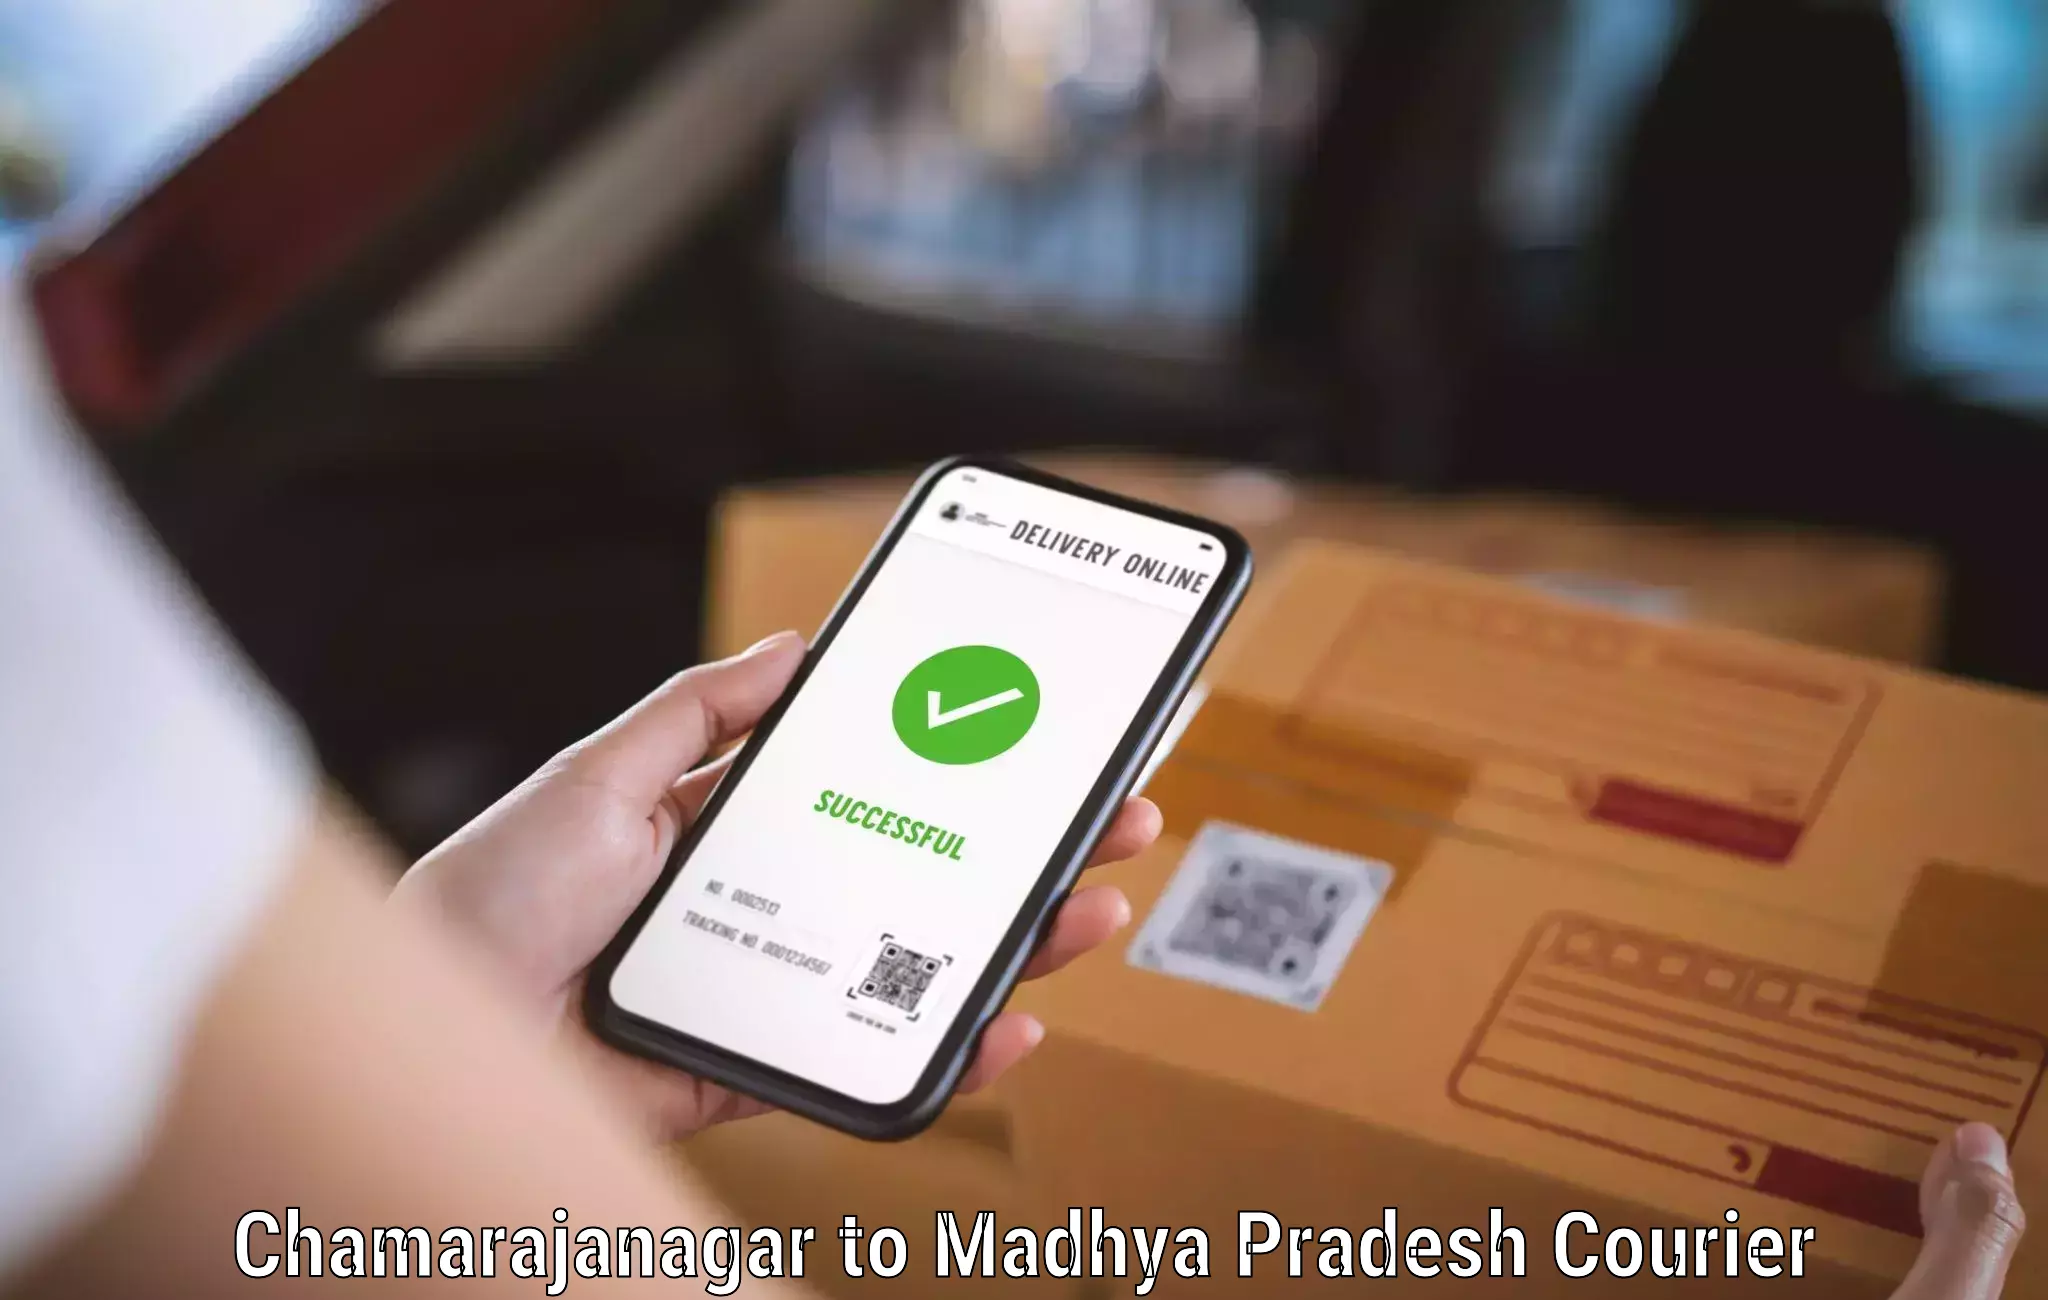 Courier service booking Chamarajanagar to Karera